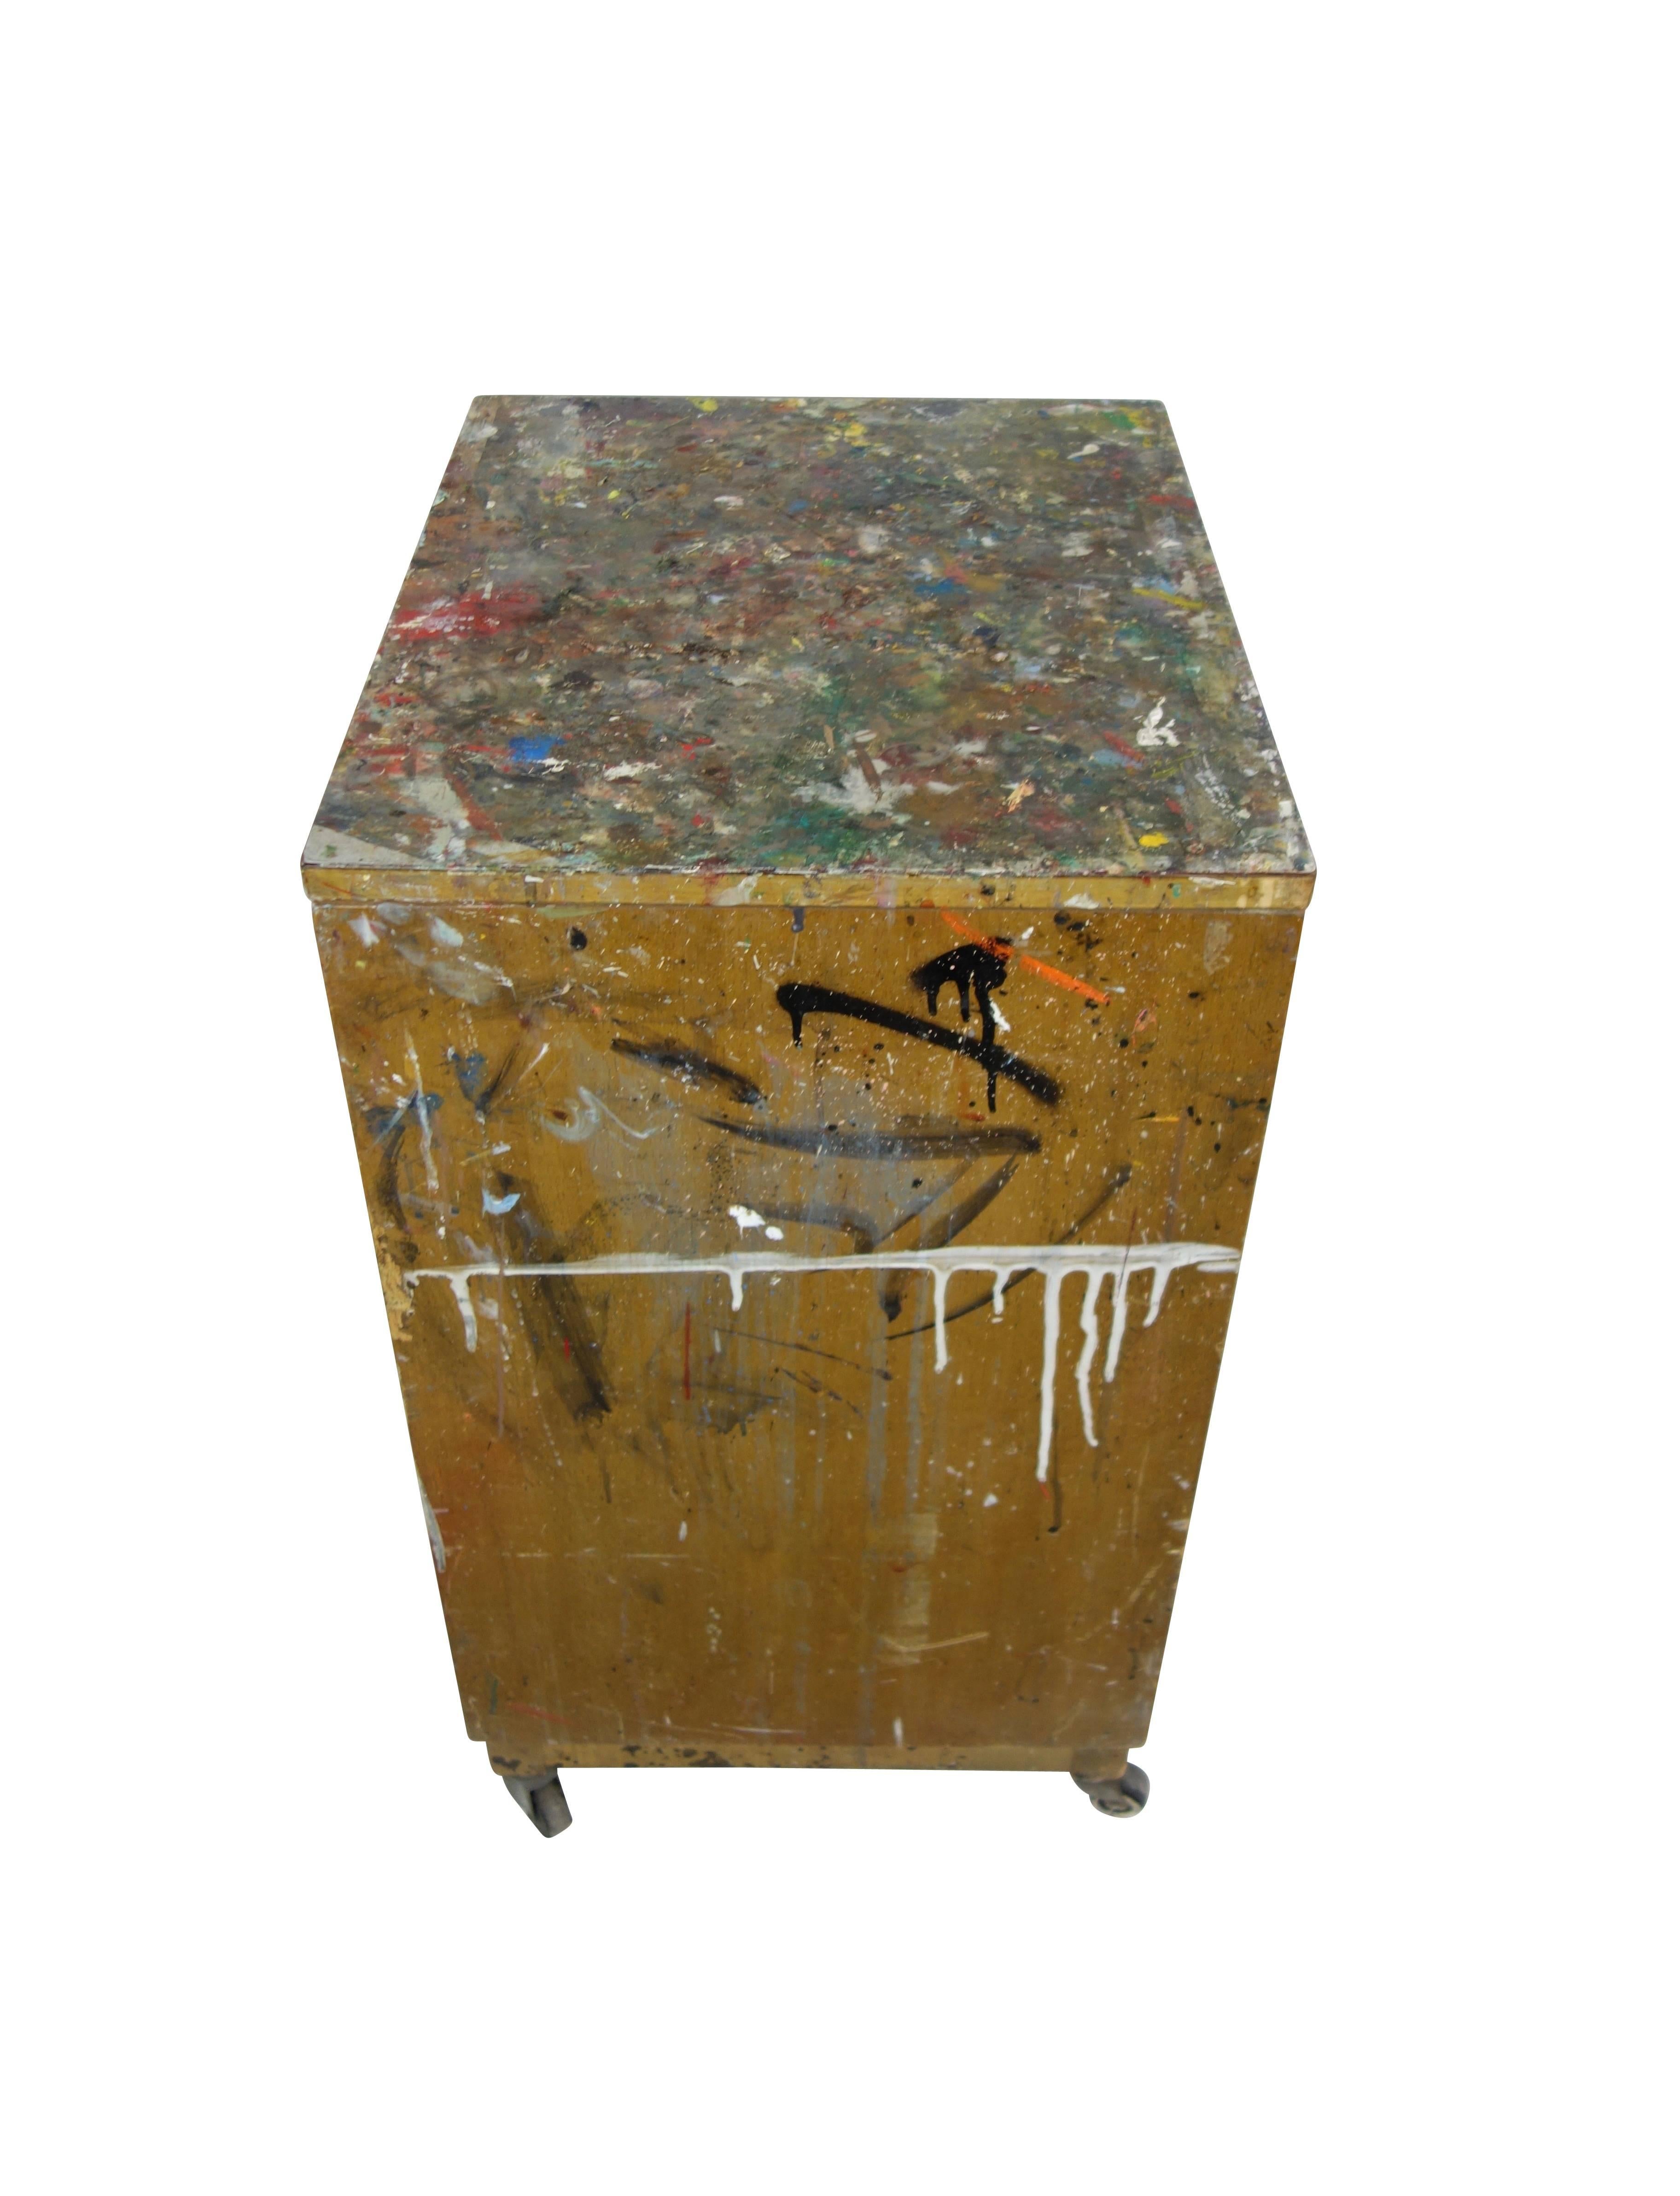 Wood Paint Splattered Cabinet from an Artist Studio